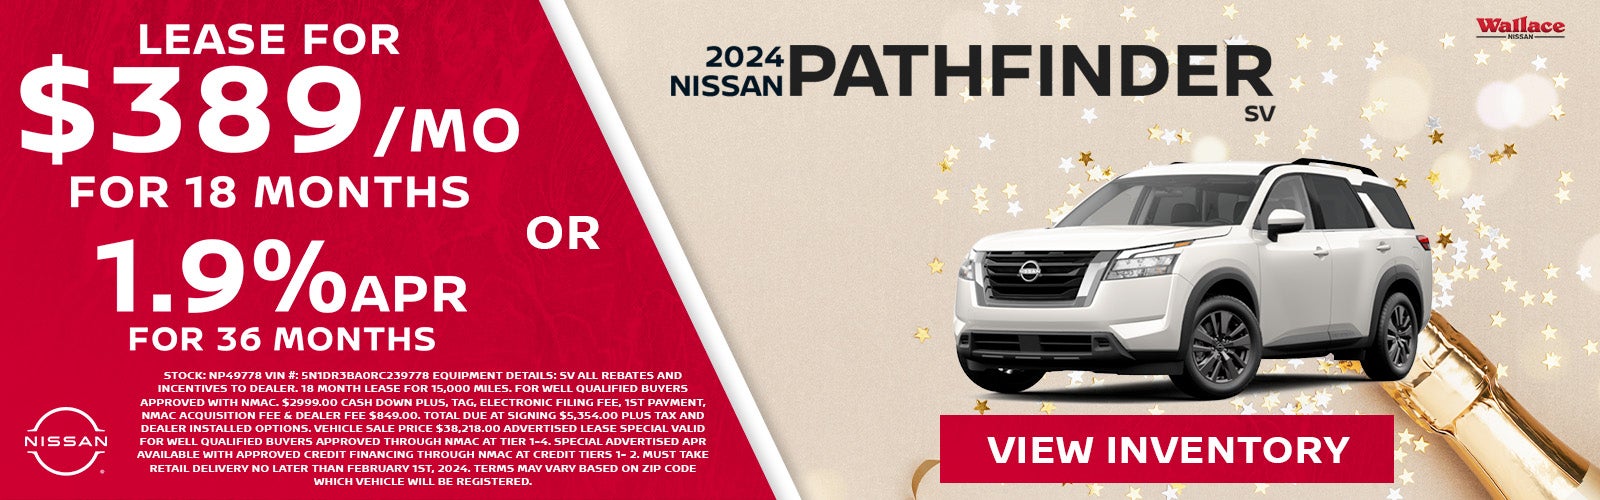 Nissan Pathfinder Special Offer